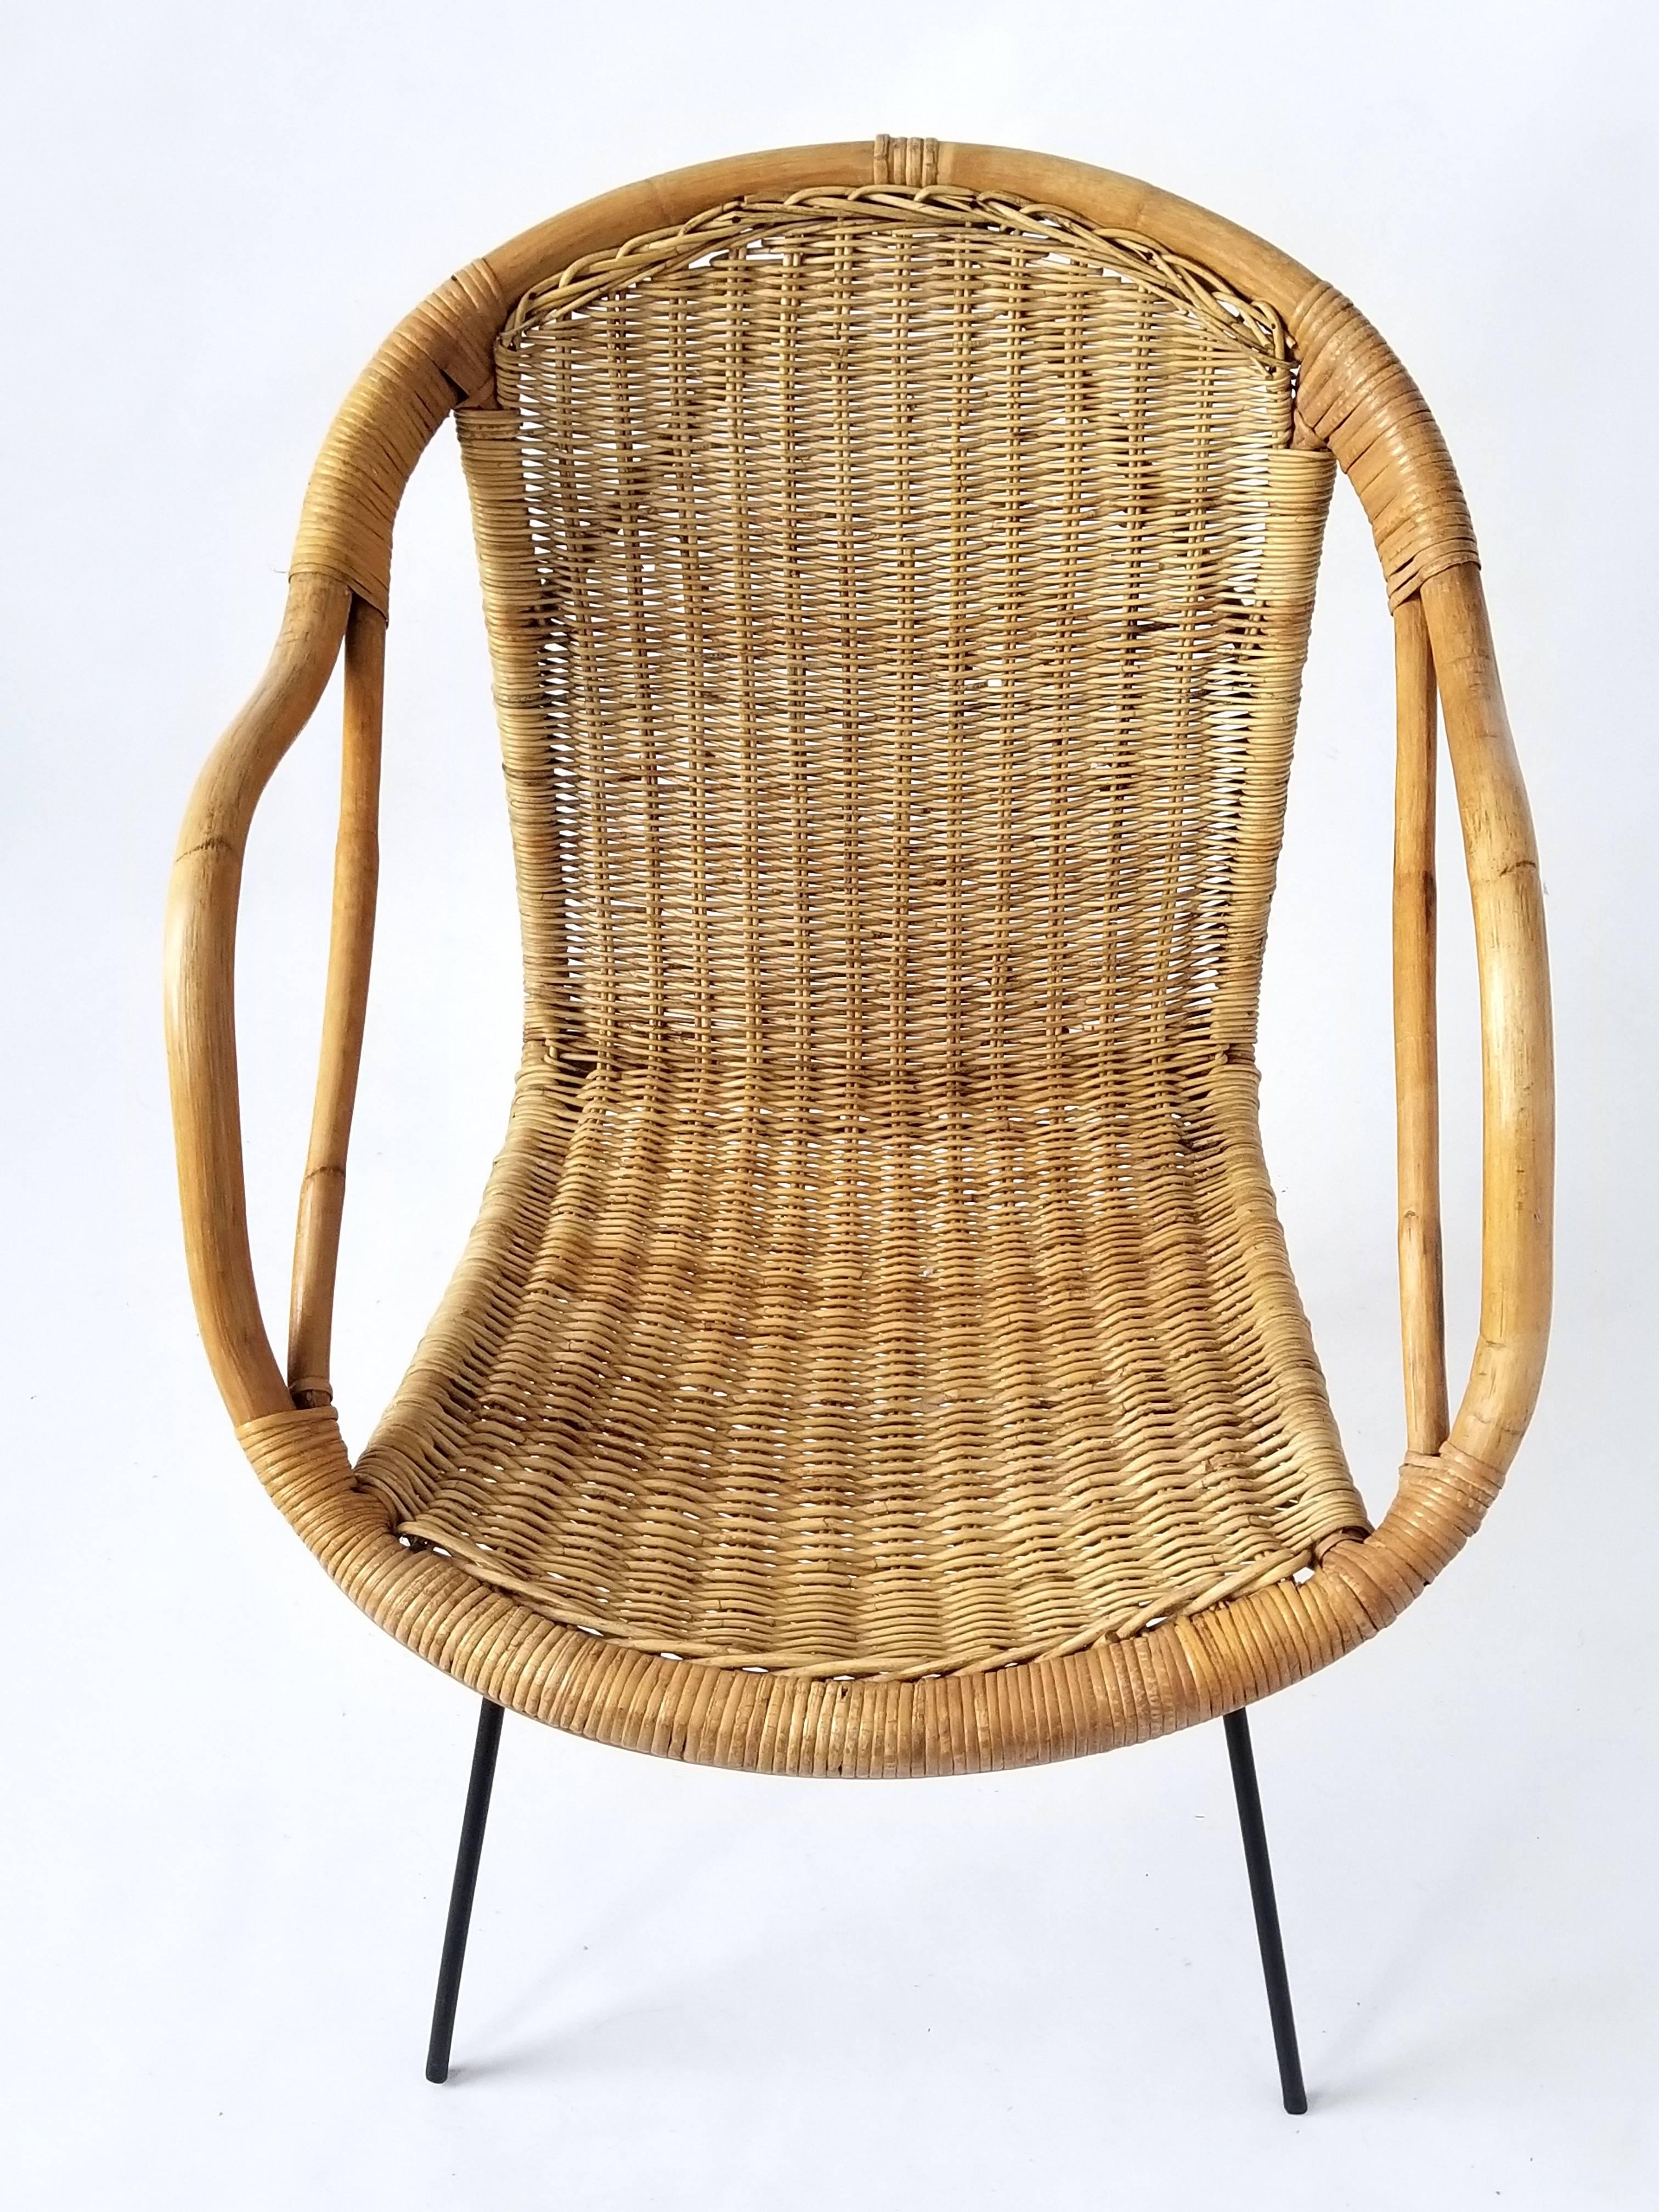 vintage wicker chair with metal legs